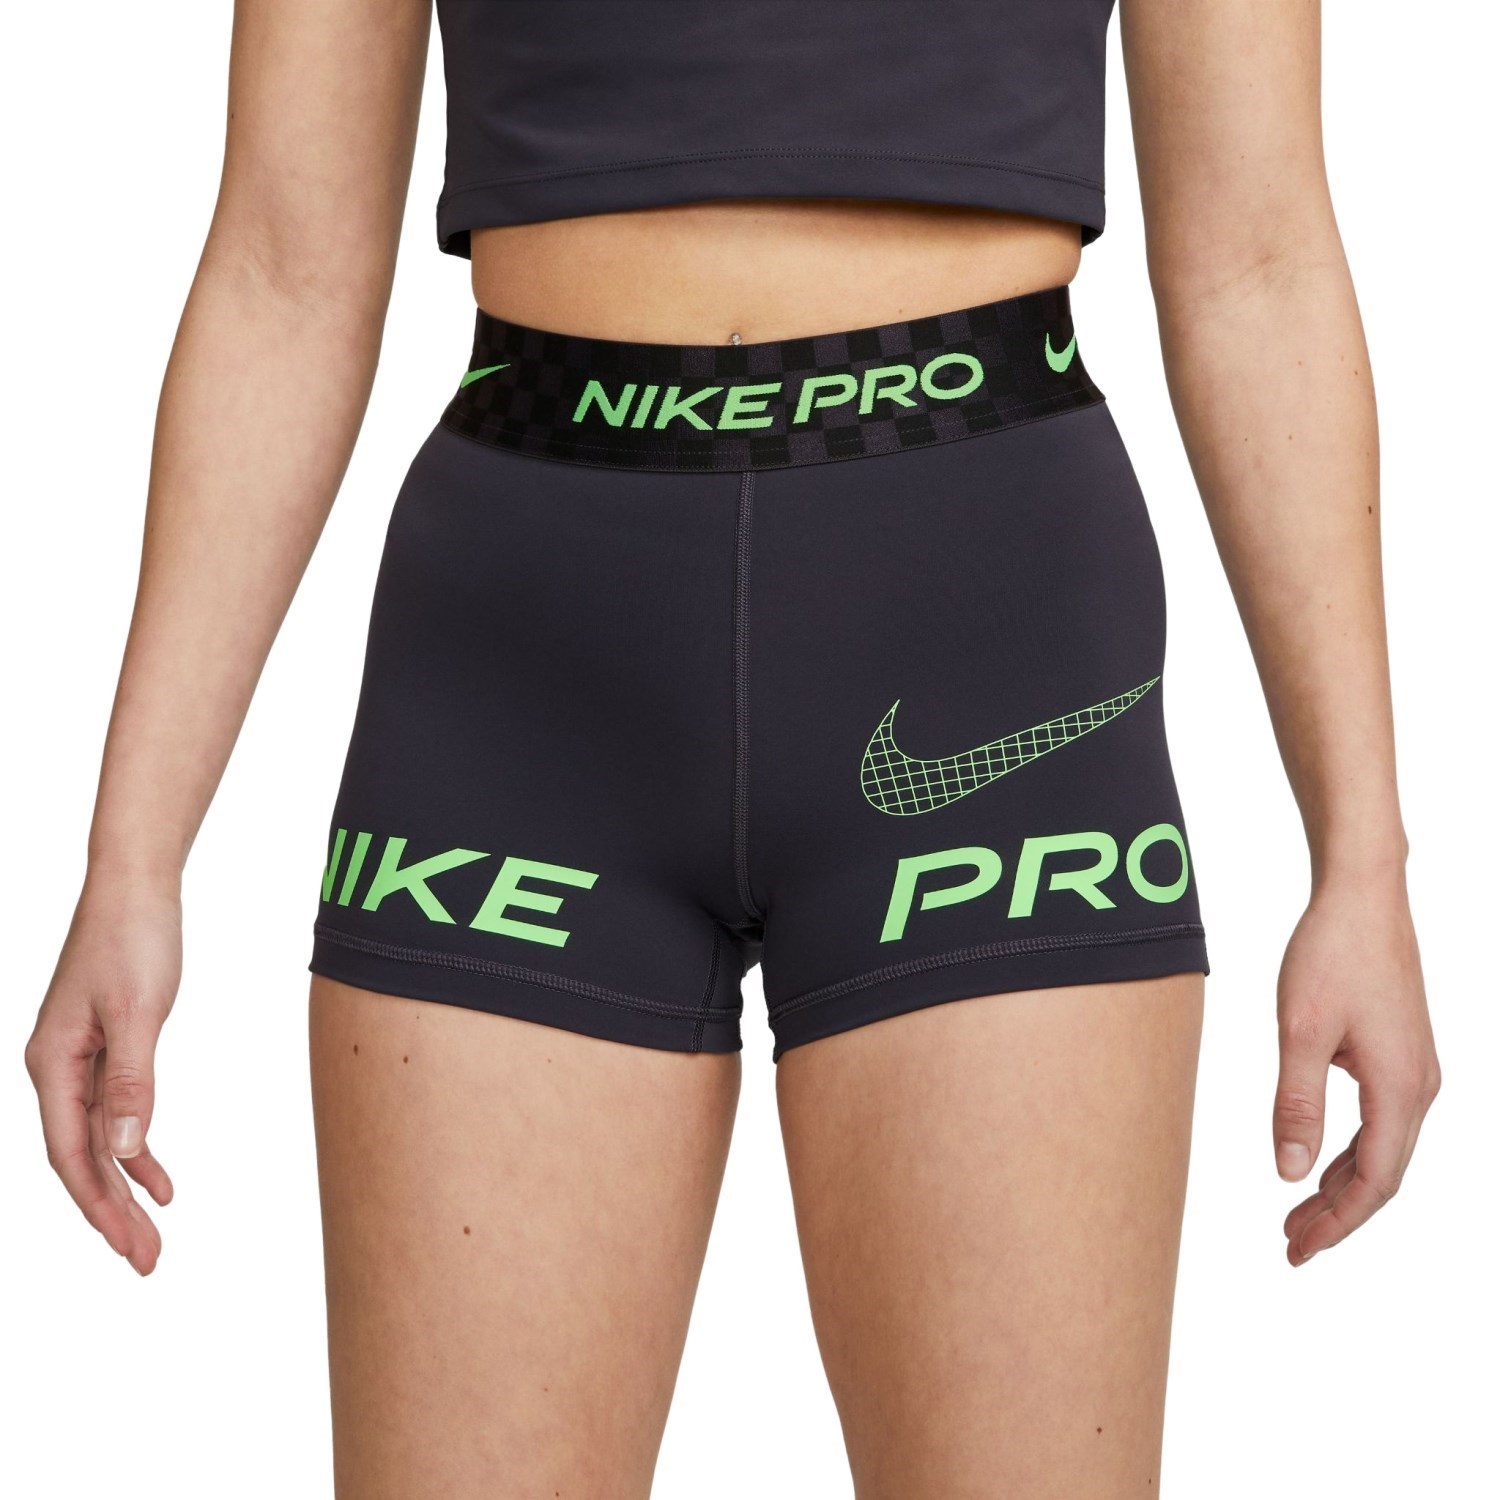 Nike Training Pro 365 3inch shorts in gray & black